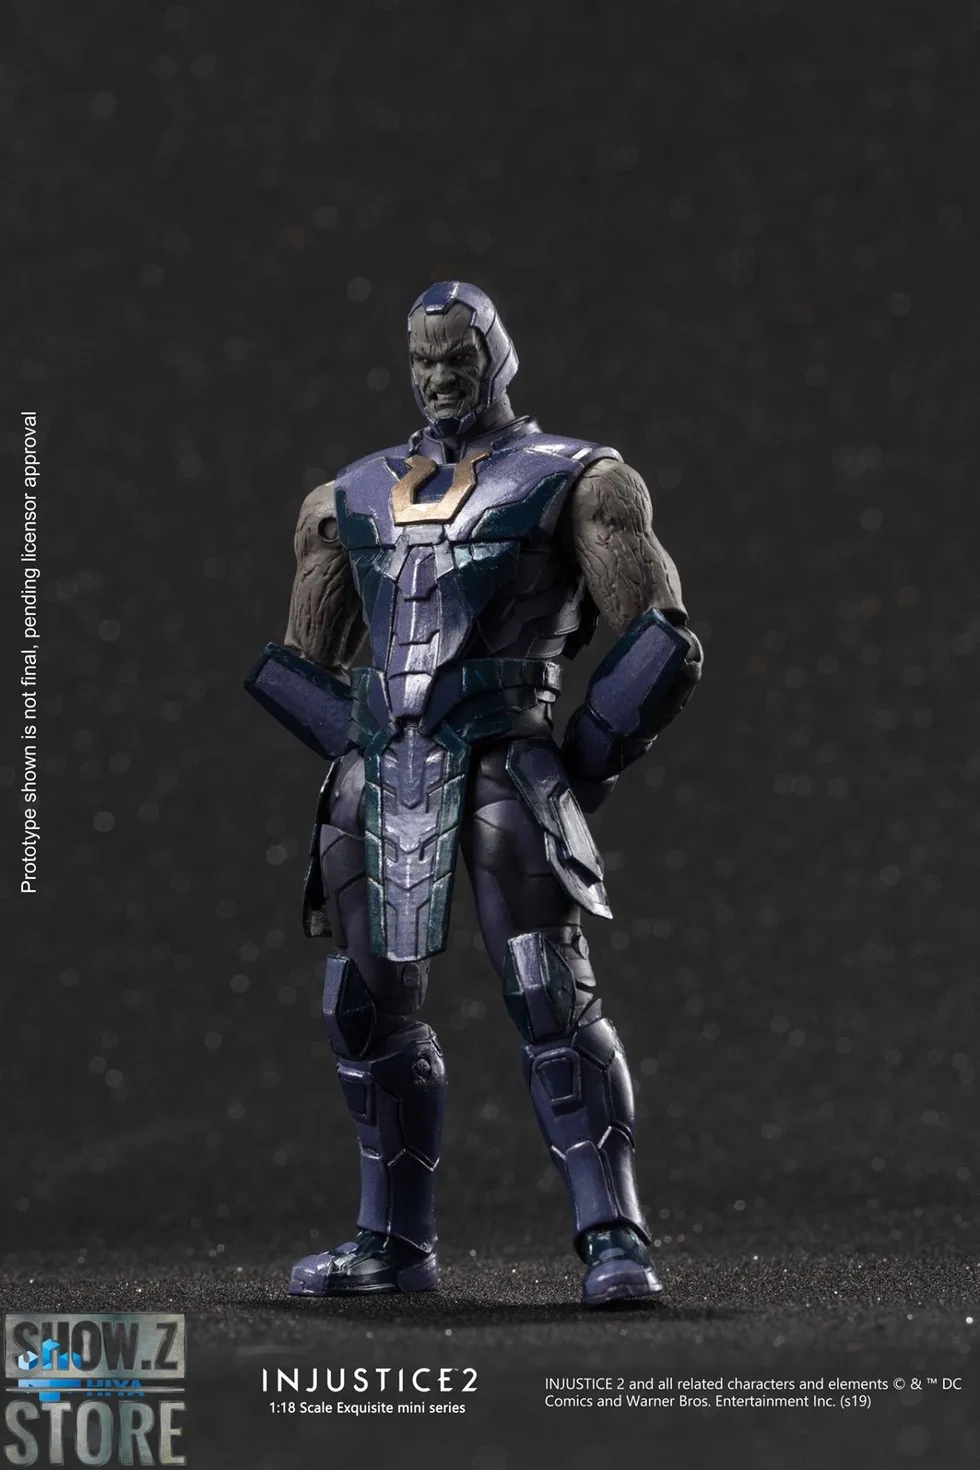 [Show. Z Store] игрушки Hiya 1/18 Injustice 2: Darkseid PX Preview эксклюзивная фигурка